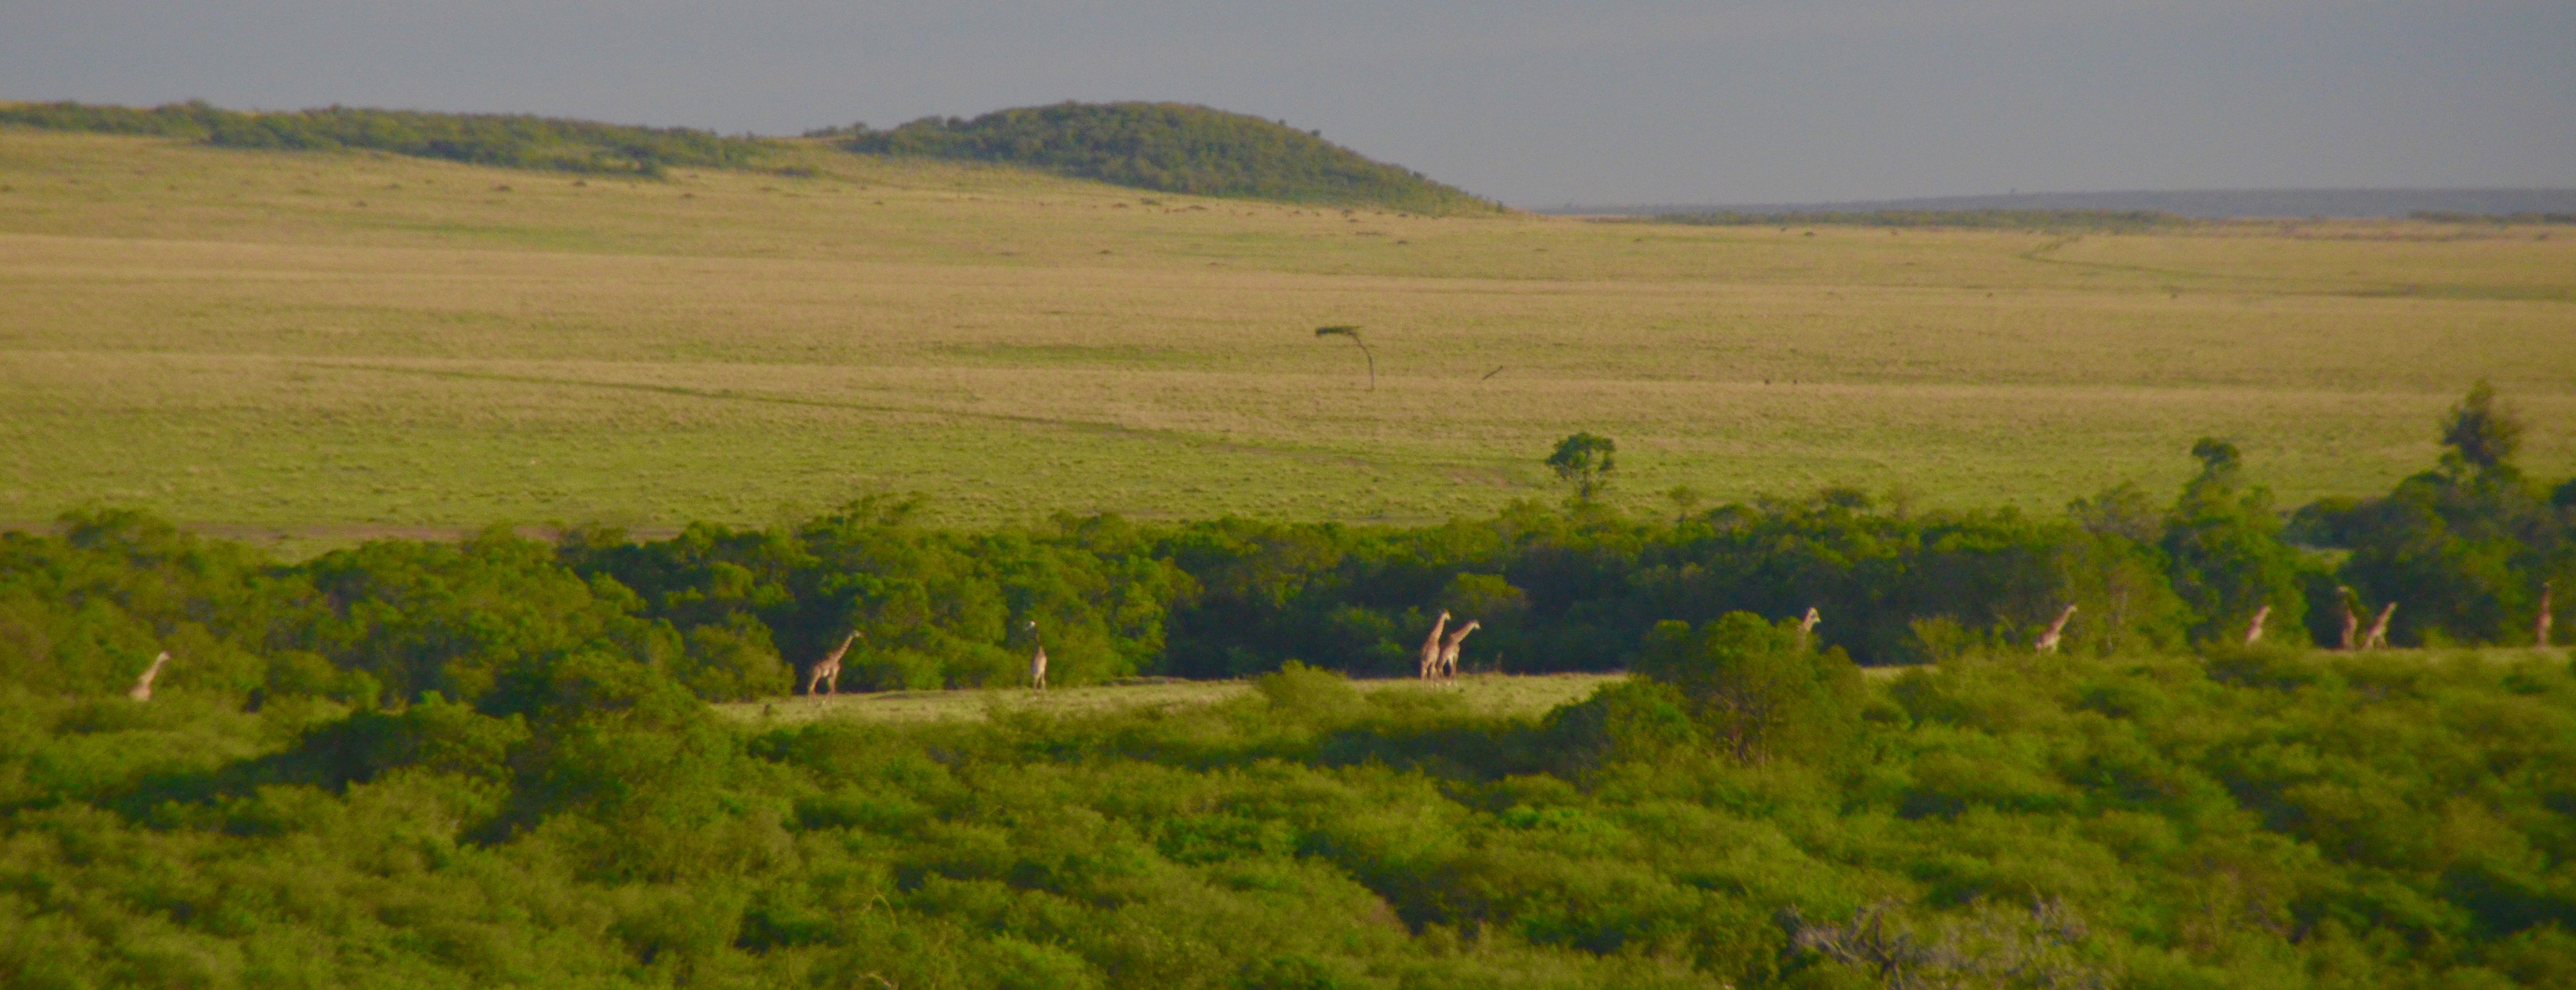 Giraffes on the Move, Masai Mara